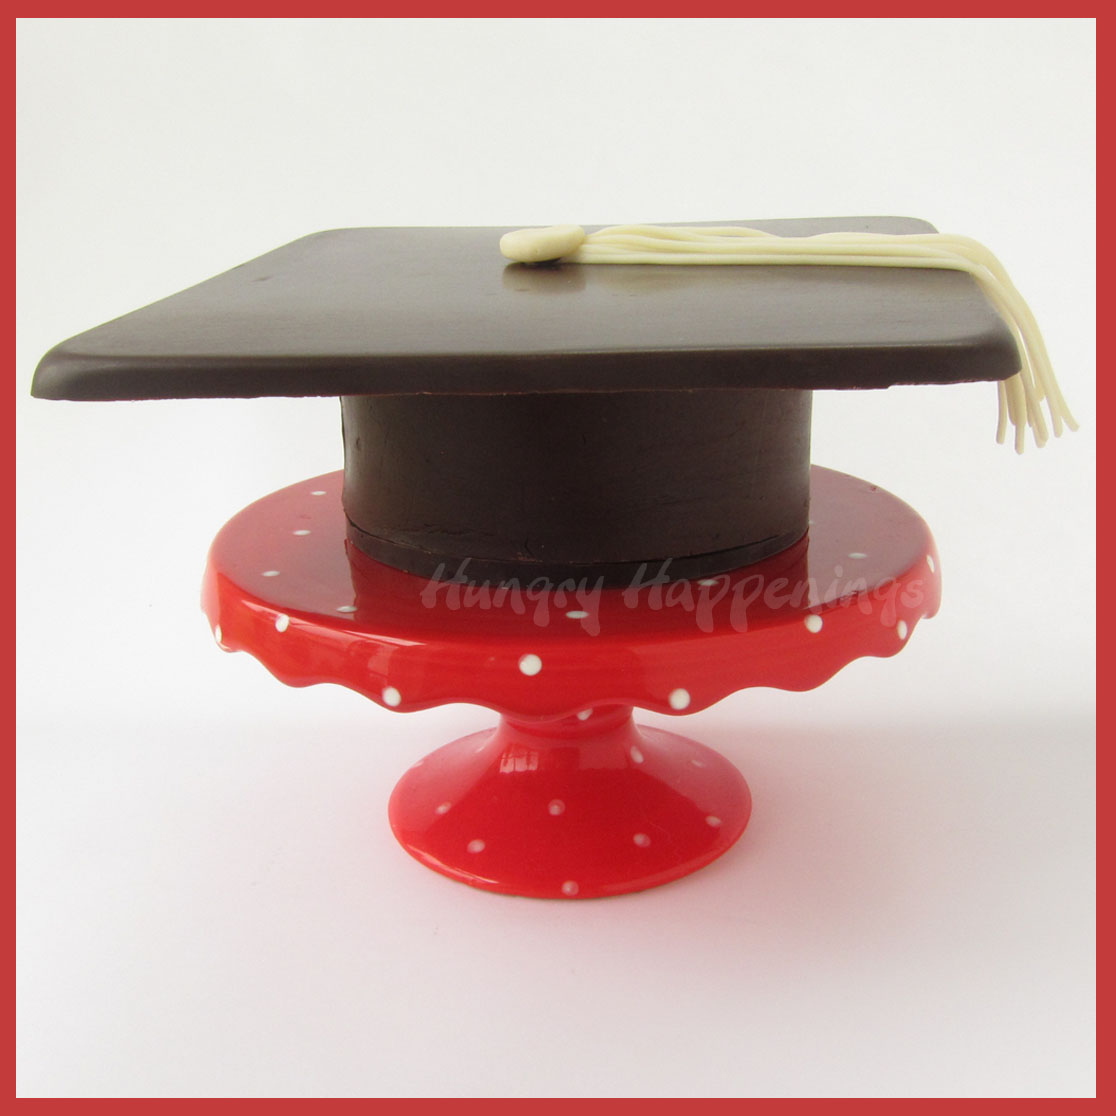 Losuya 32pcs Candy Box Graduation Cap Style Gift Sugar Chocolate Boxes for Graduation Party Decorations Supplies